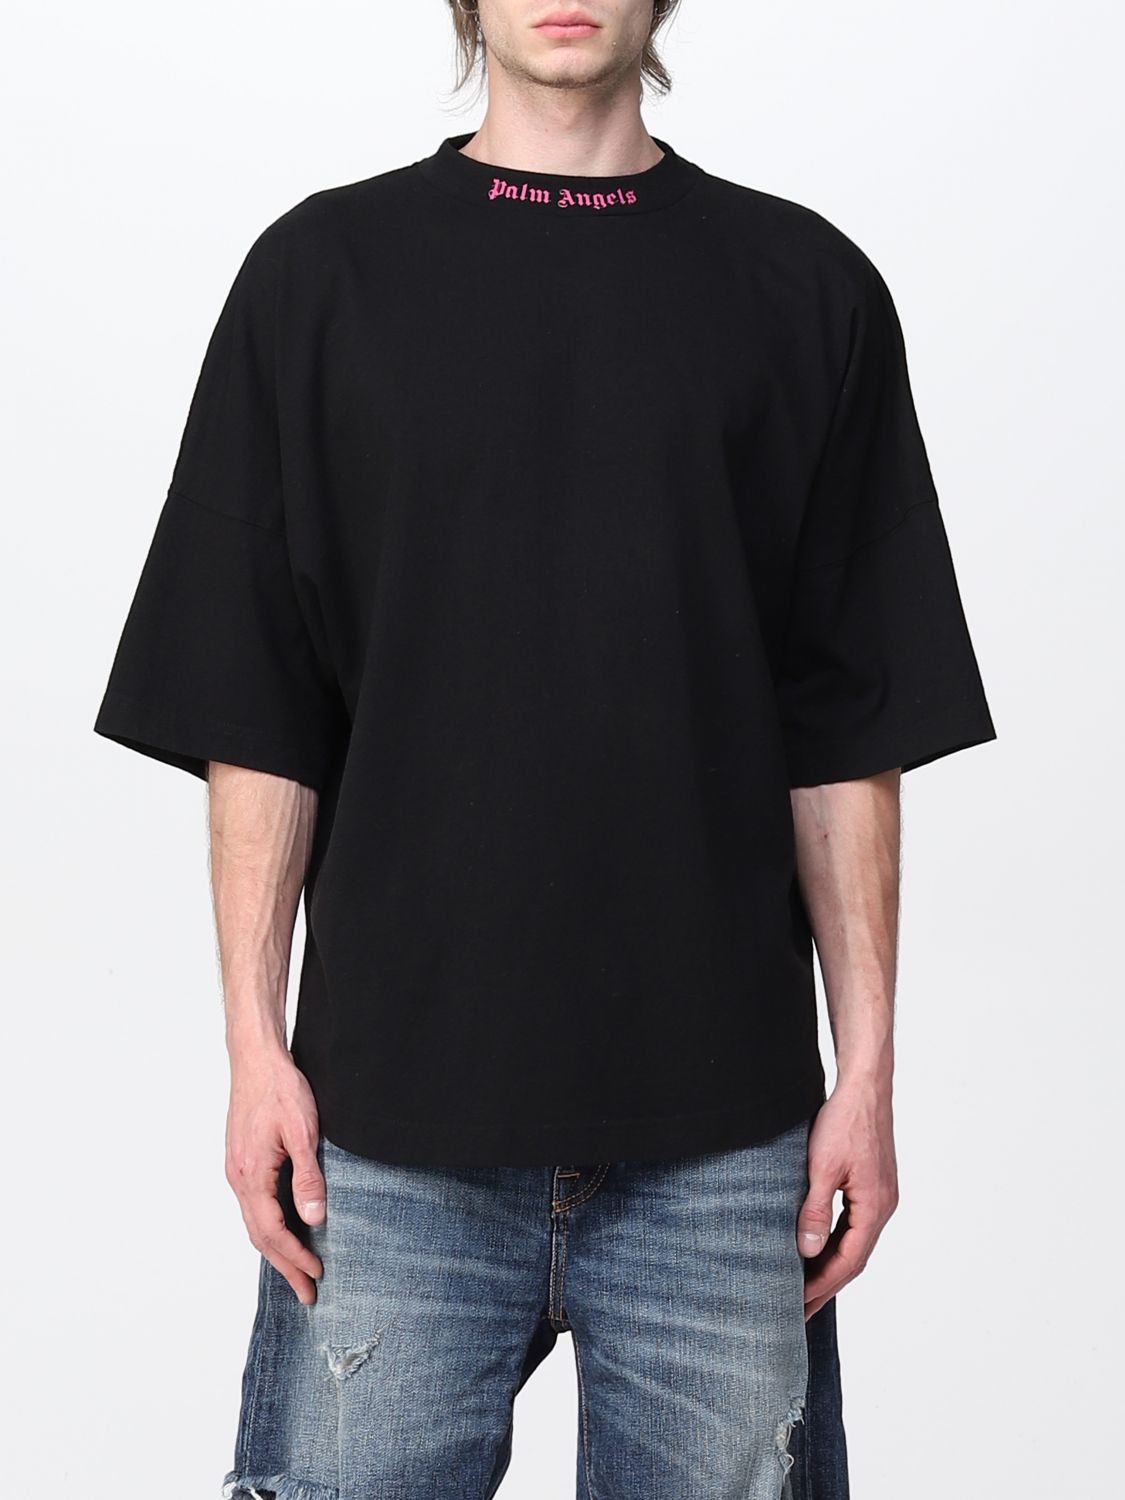 PALM ANGELS: T-shirt with back logo - Black | Palm Angels t-shirt ...